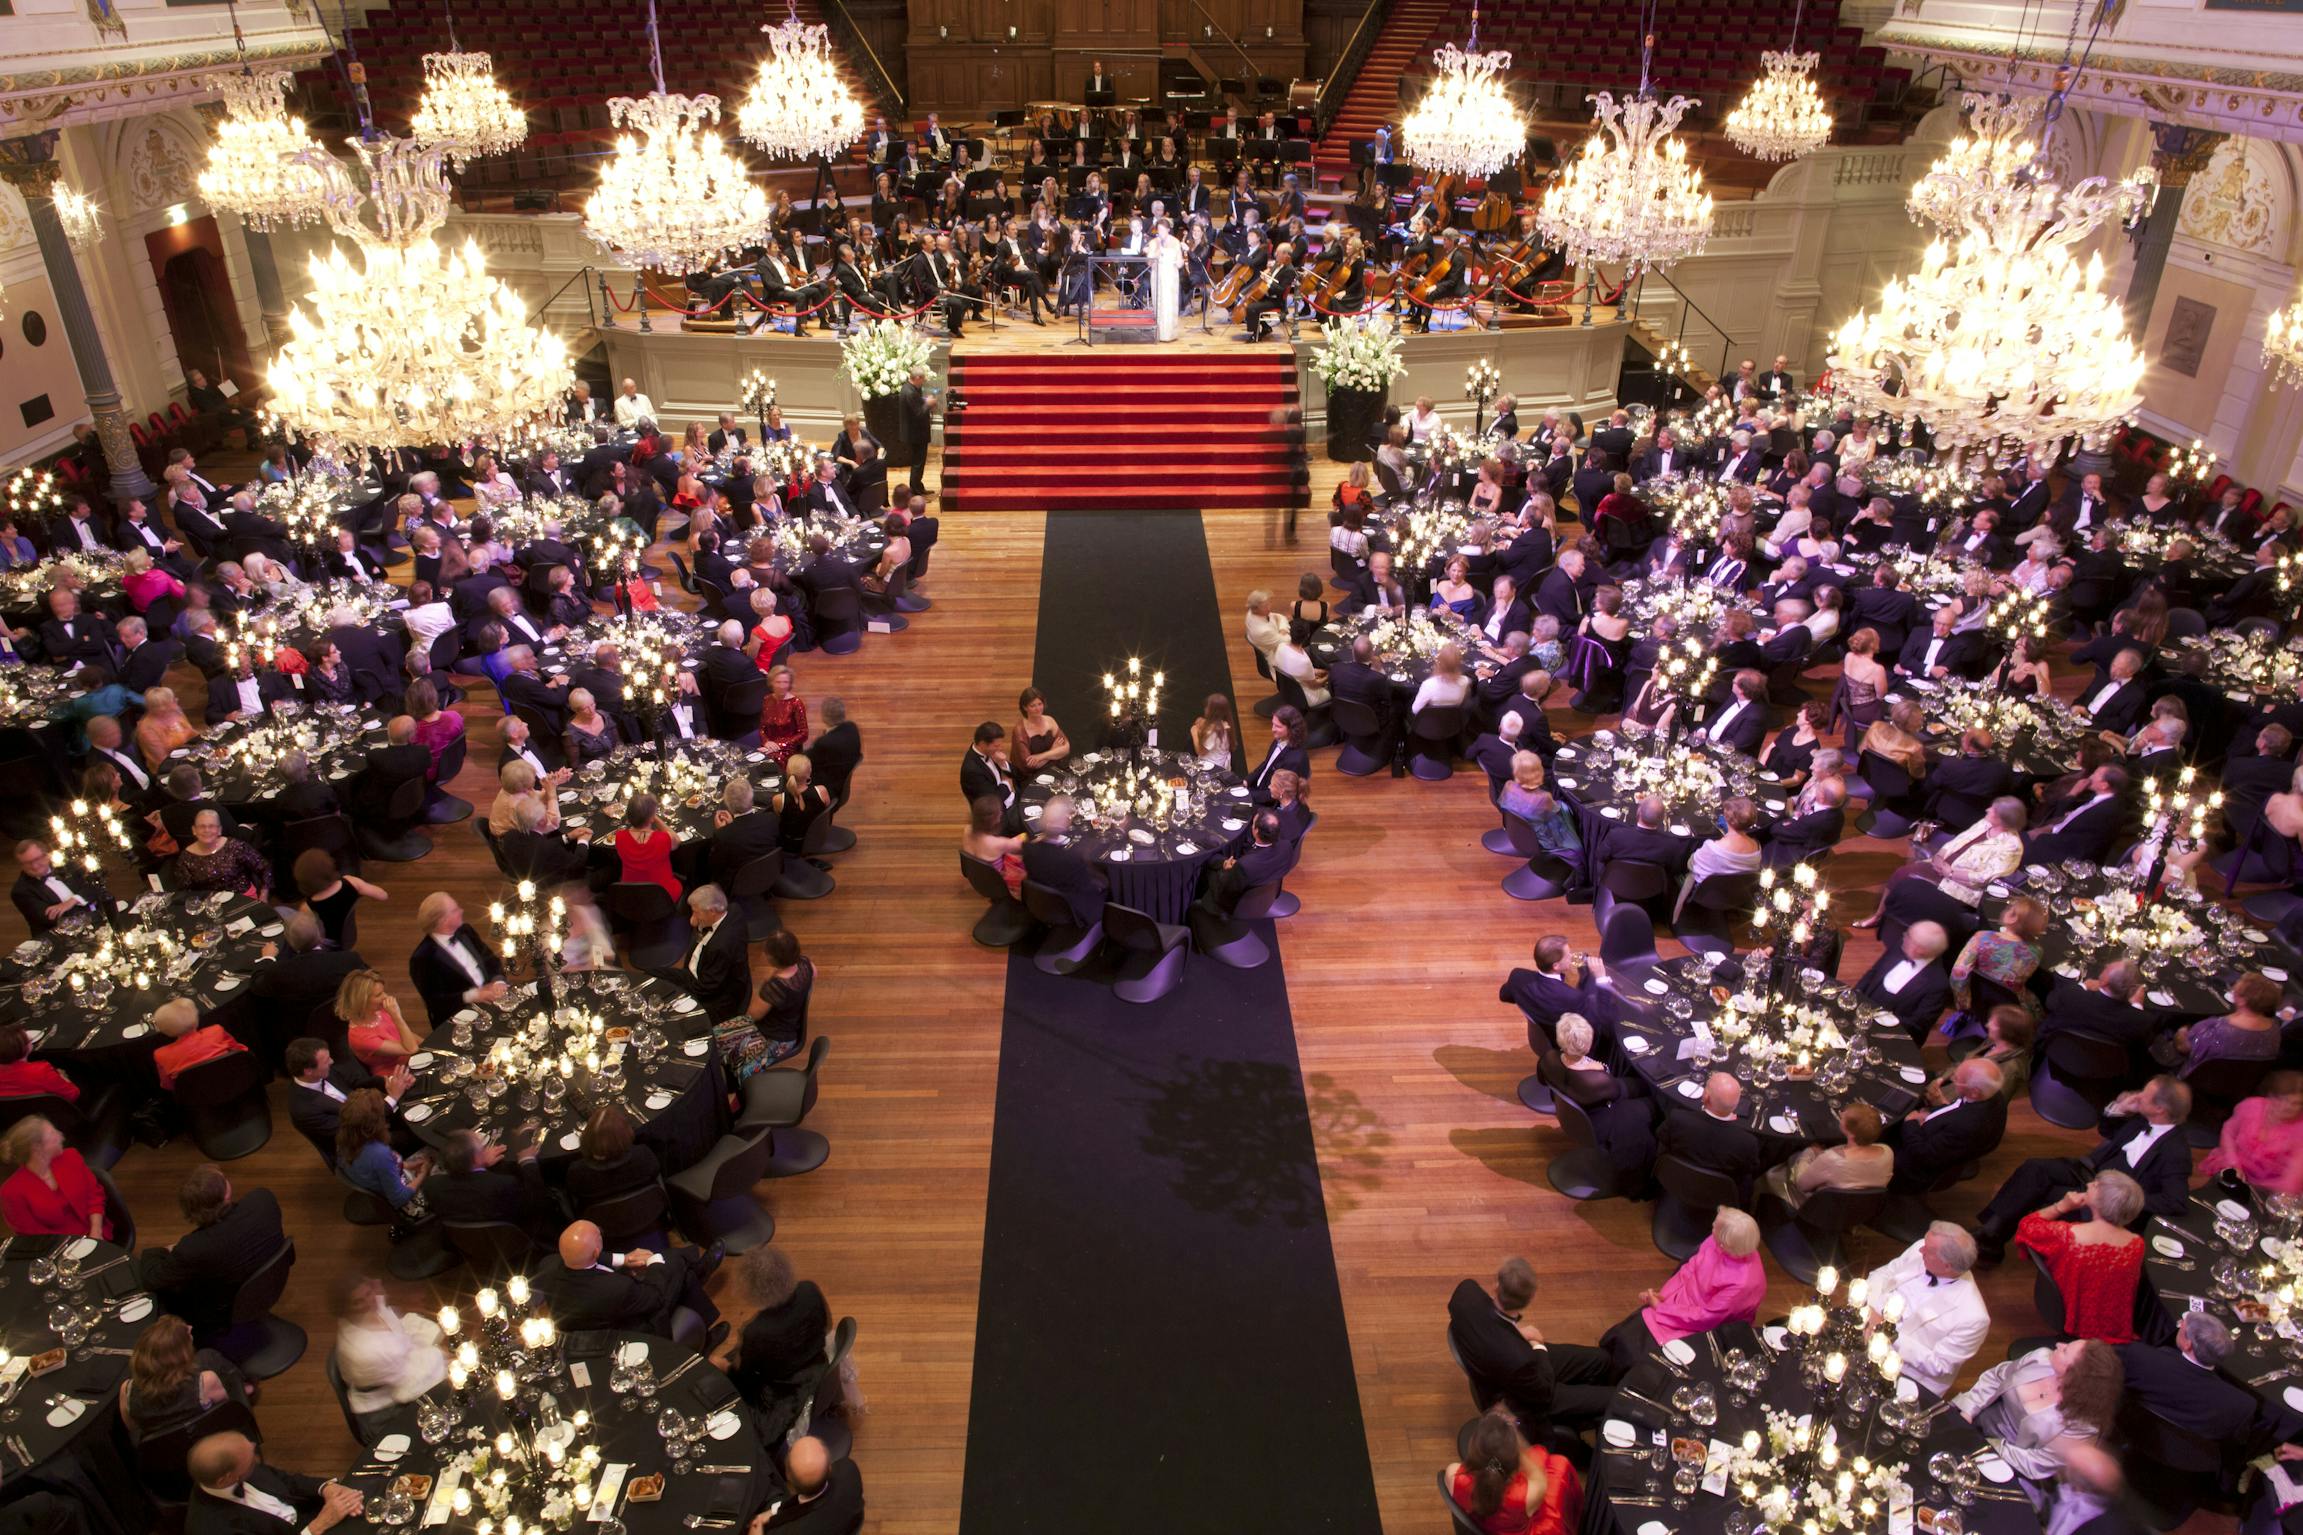 Royal Concertgebouw of Amsterdam - dinner location